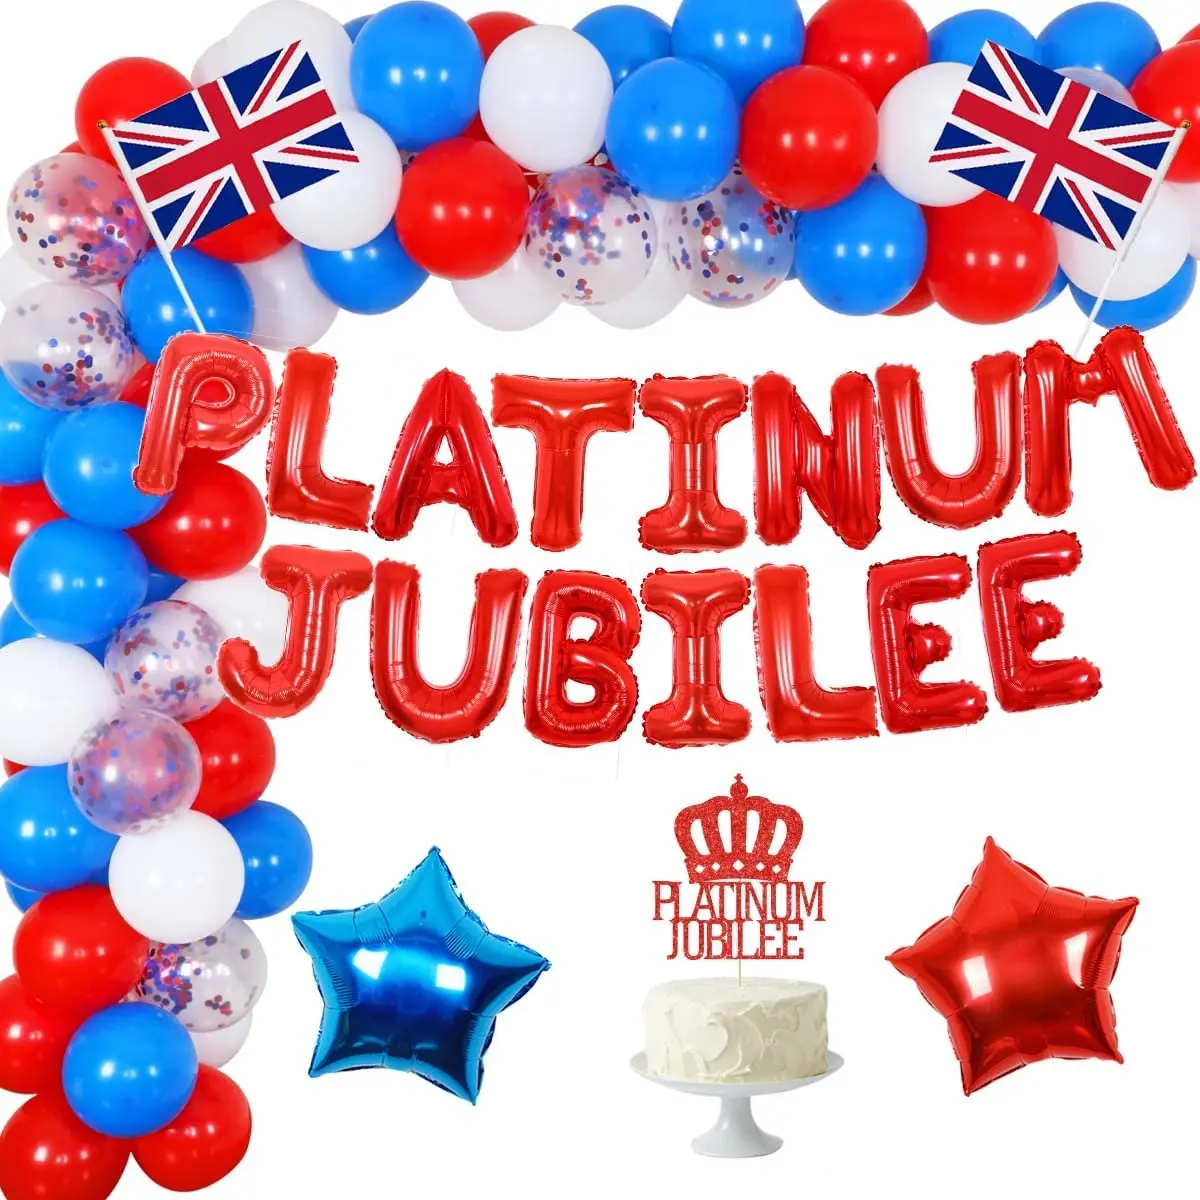 

SURSURPIRSE Queens Platinum Jubilee Party Decorations Balloon Garland Arch Kit Banner British Bunting Cake Topper Union Jack